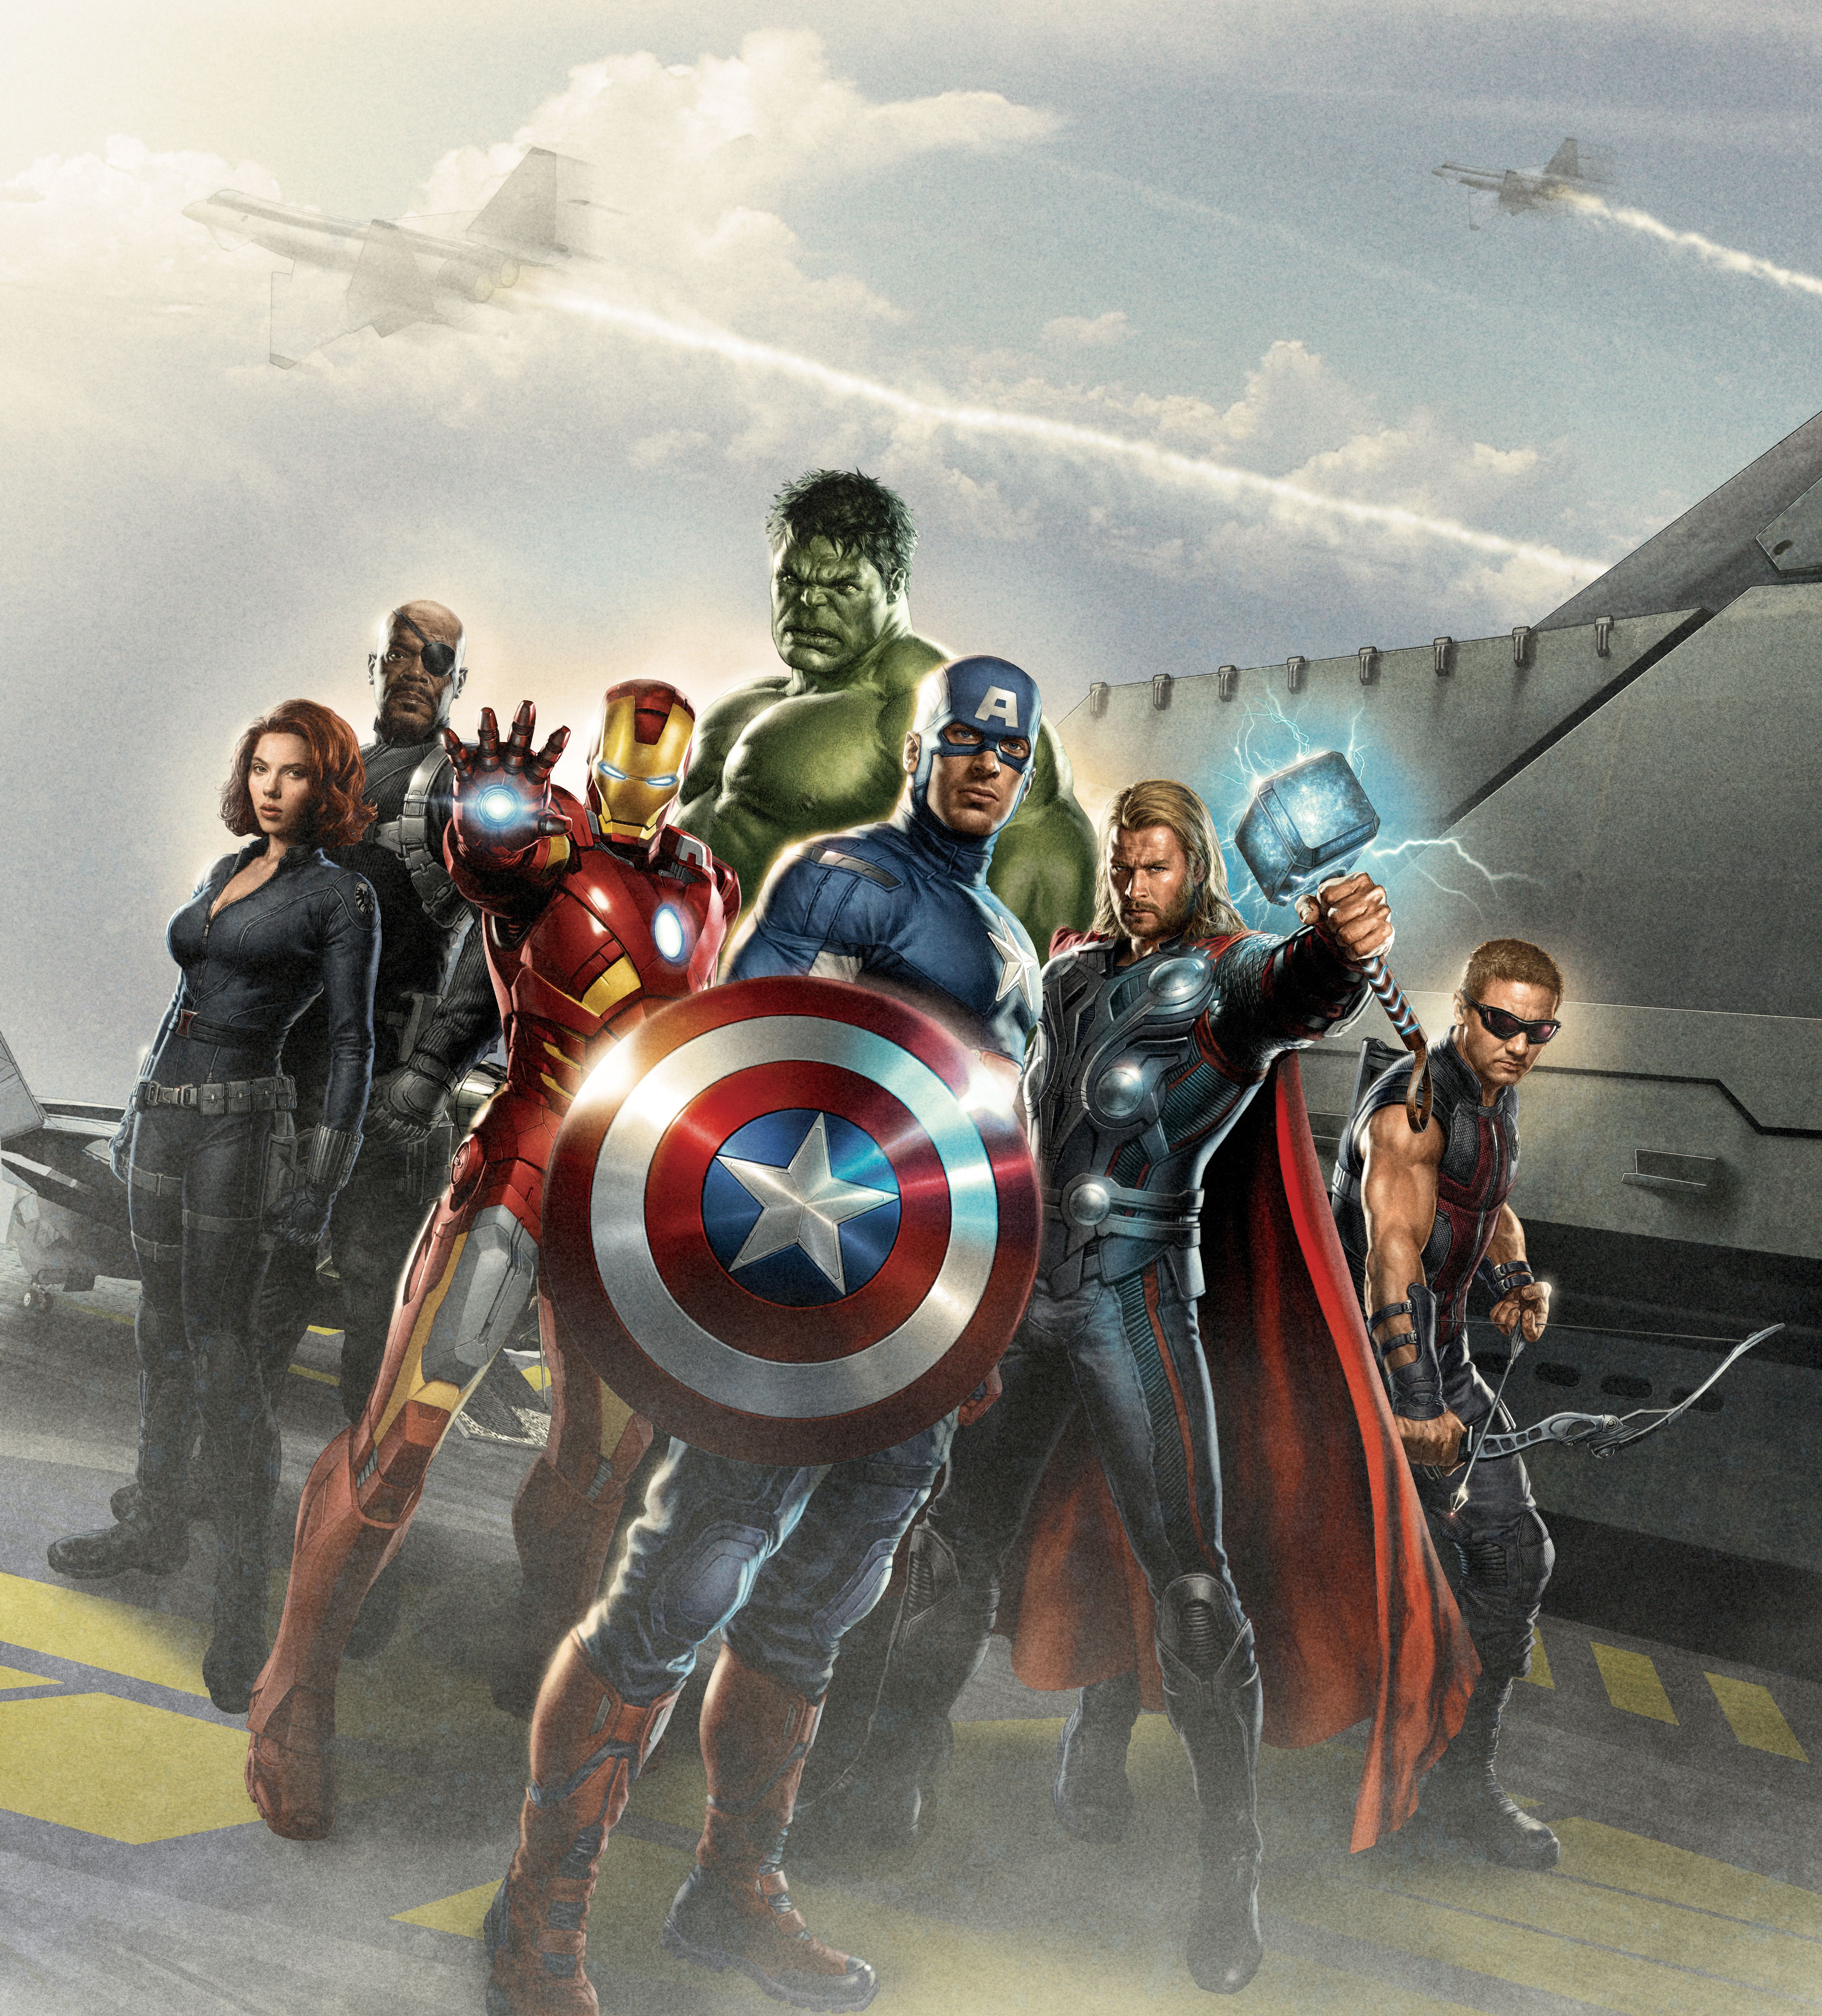 #Iron Man, #The Avengers, #Captain America, #Hawkeye, #Nick Fury, # Thor, #The Hulk, #Black Widow